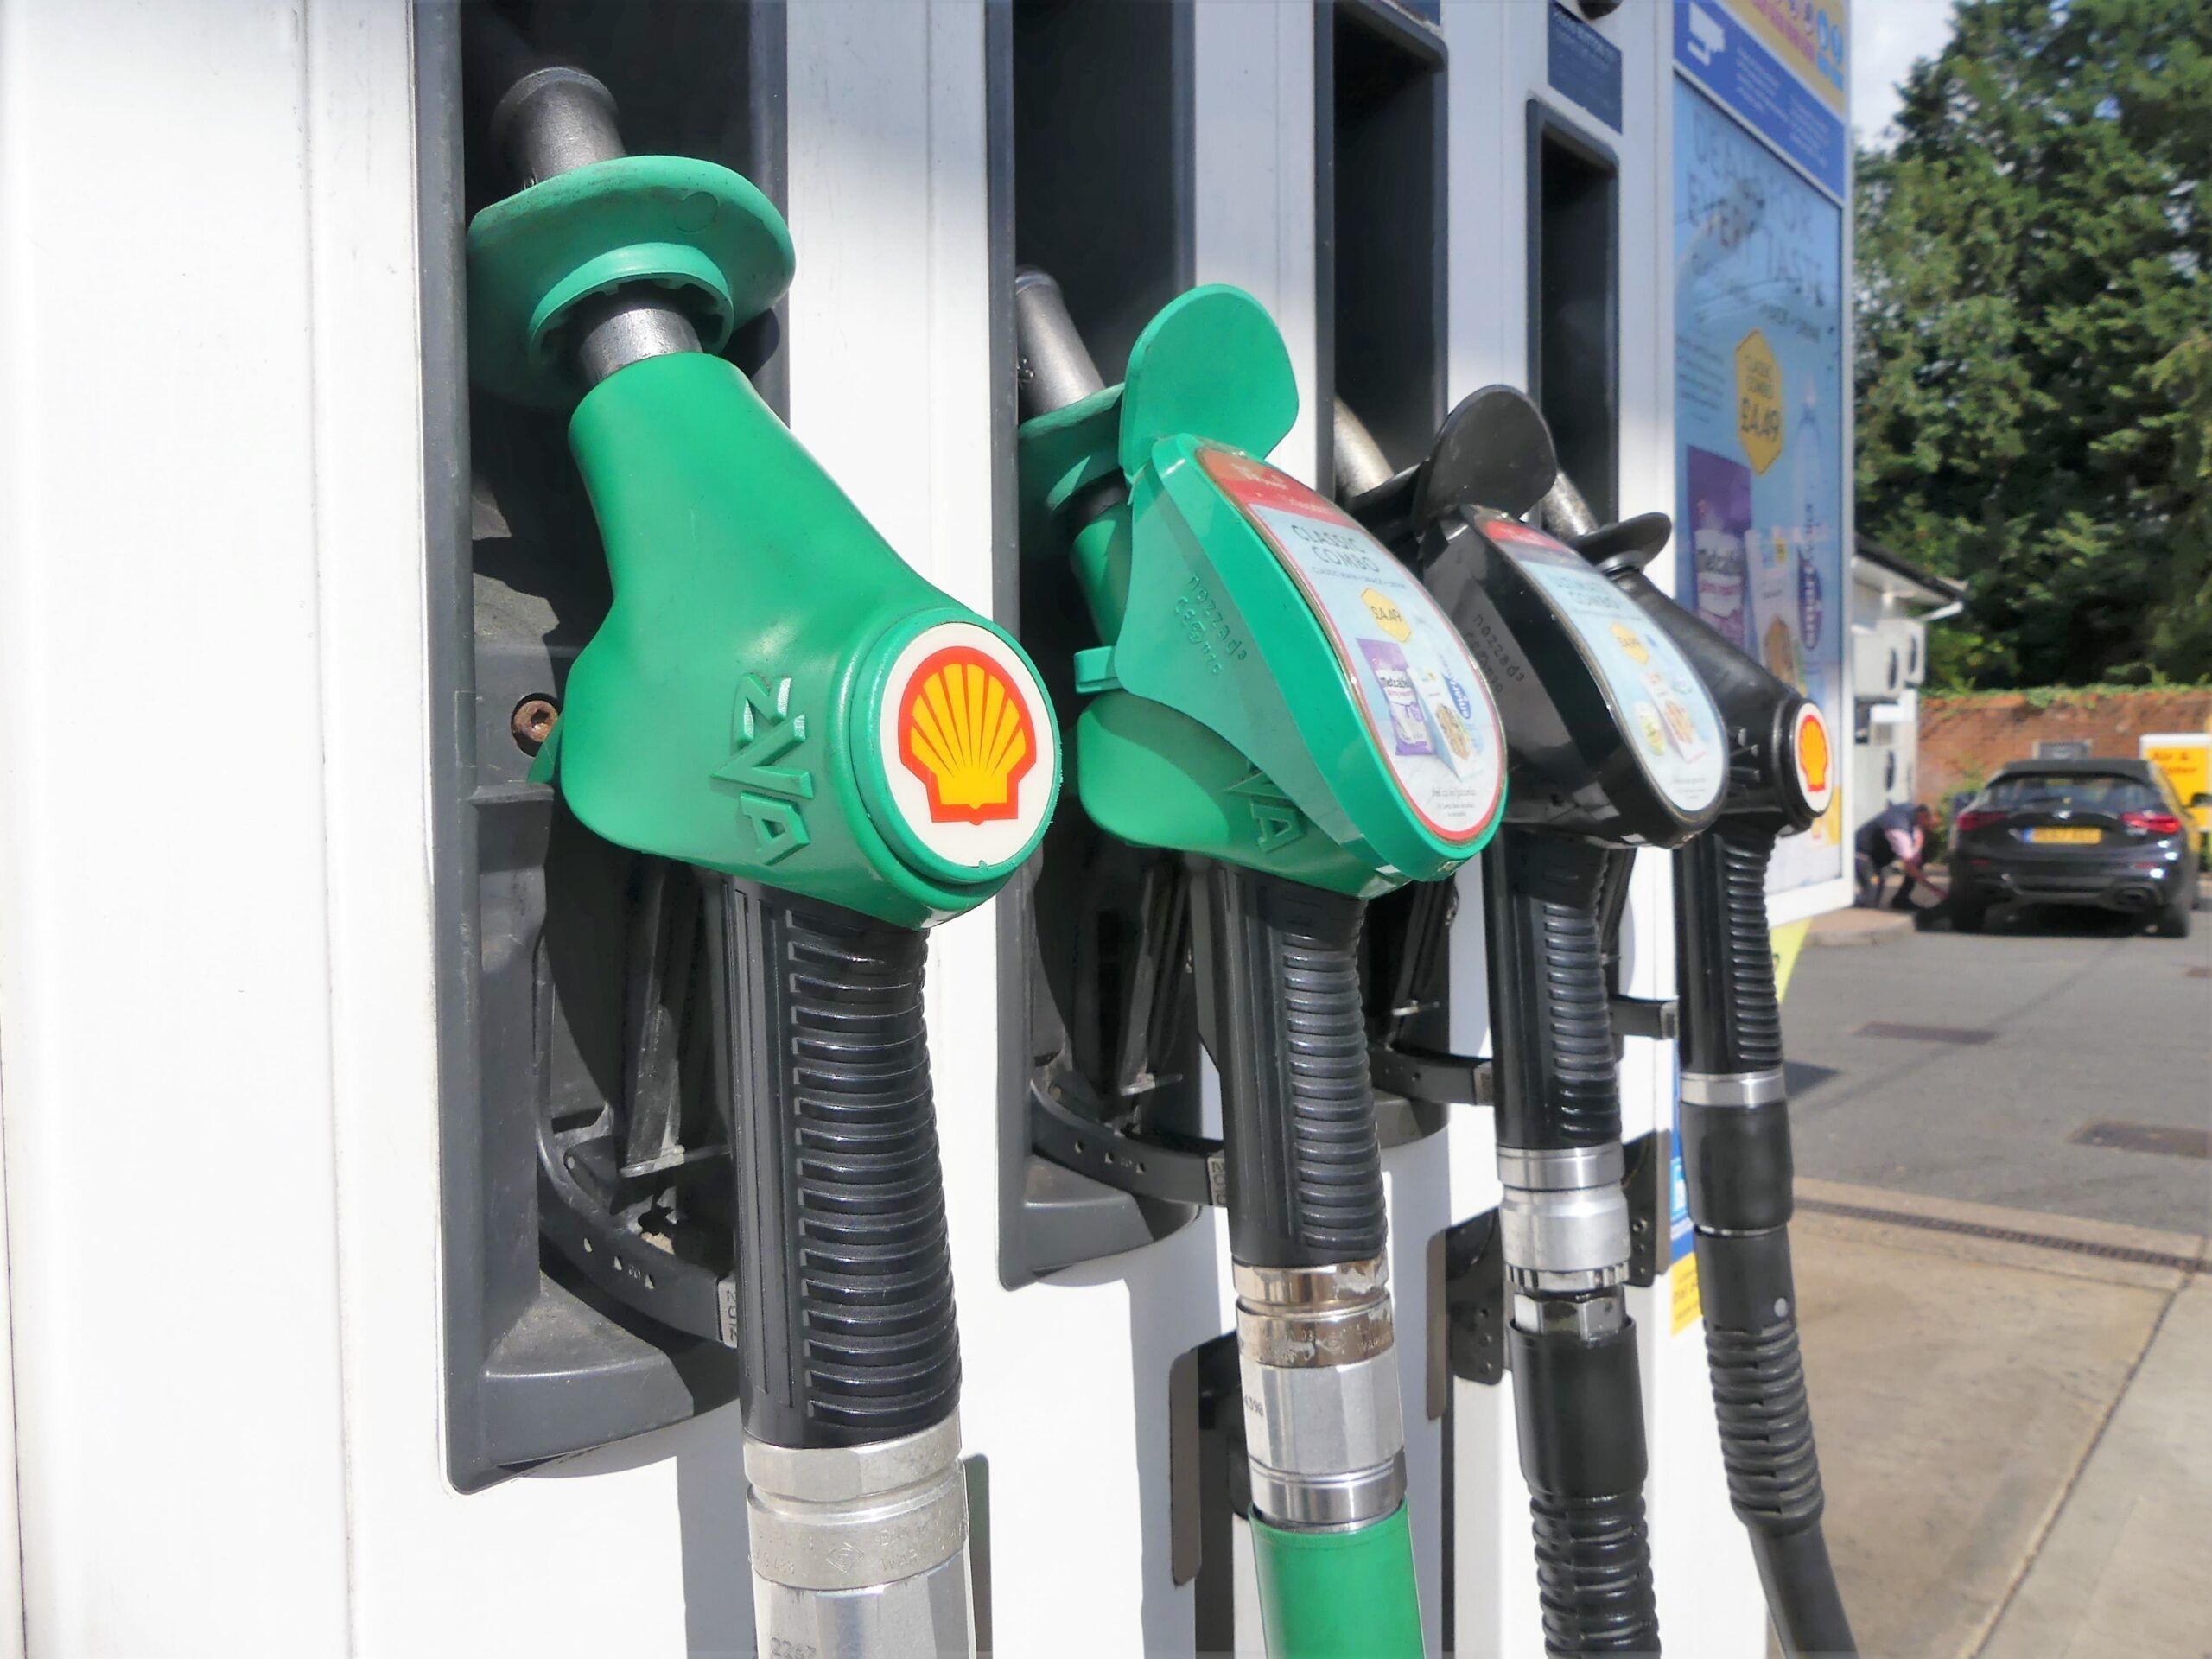 Petrol sales suffered 20% drop in 2020